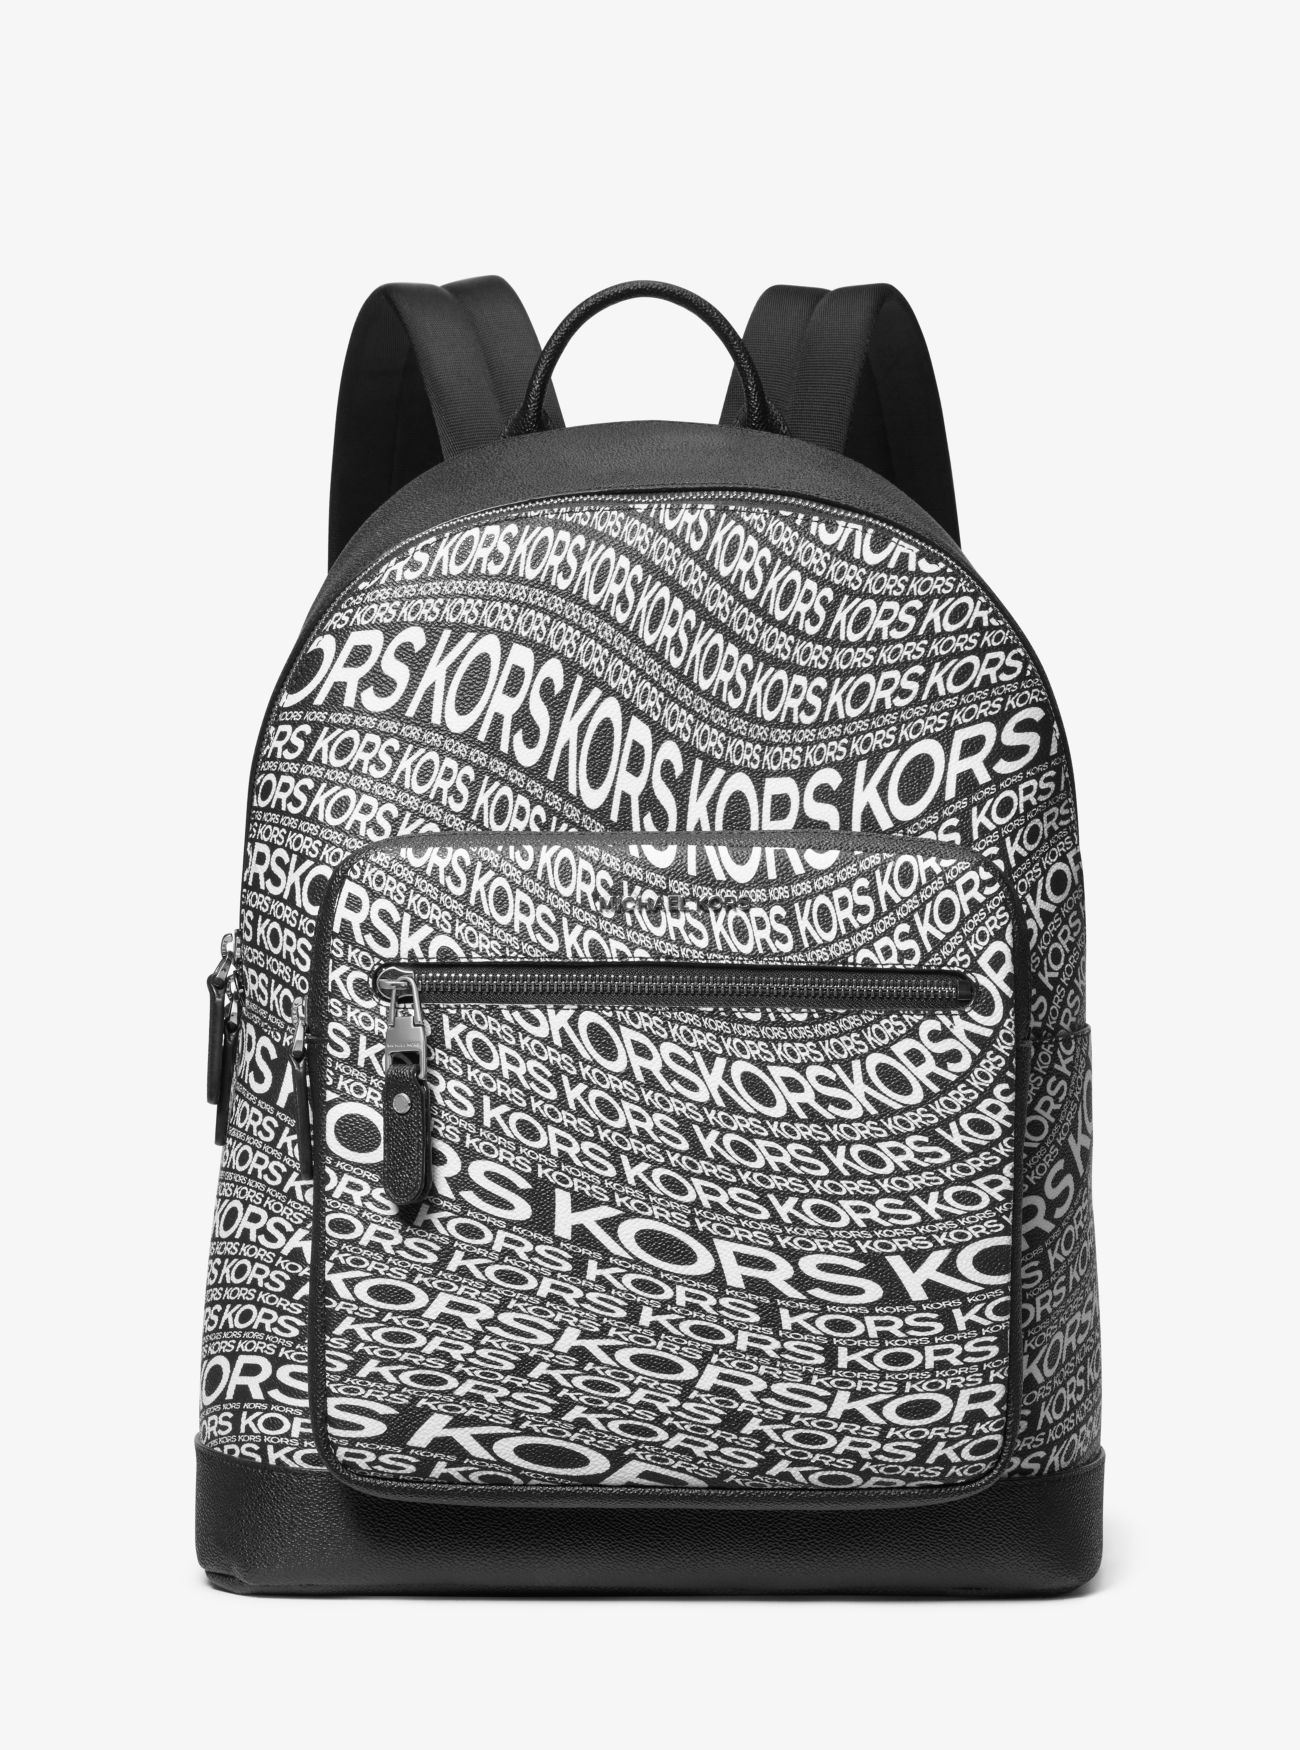 MK Hudson Graphic Logo Backpack - Blk/wht Mlti - Michael Kors